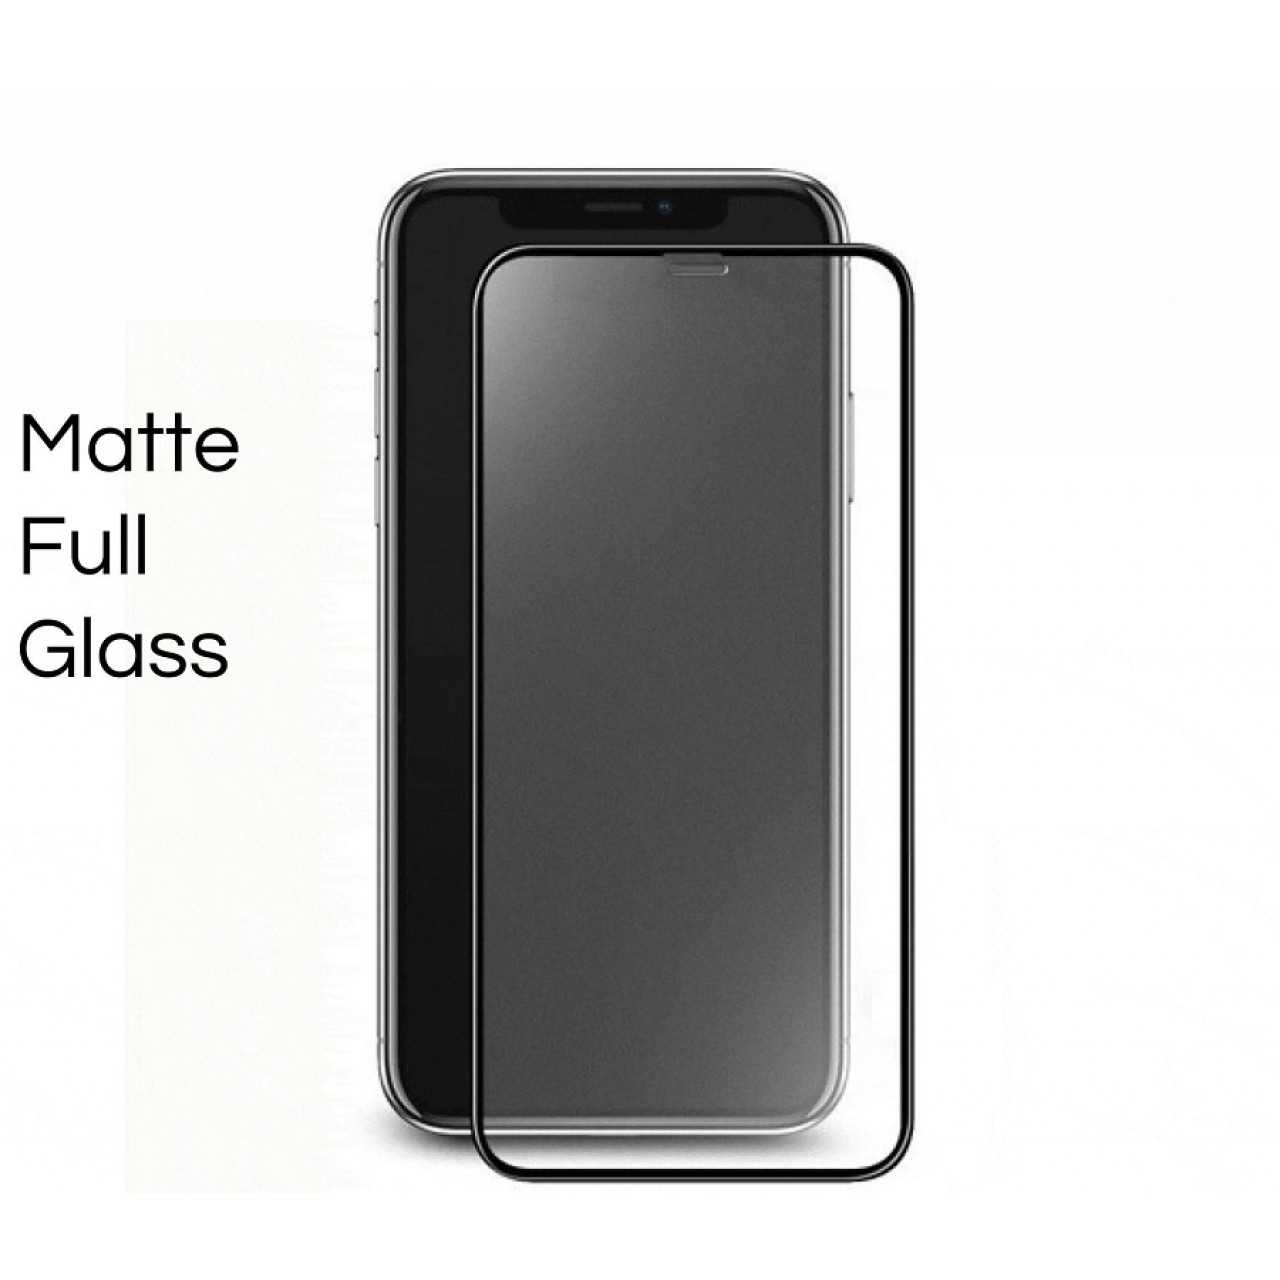 iPhone X - XS Matte Tempered Glass Full Screen Protection - Ματ Προστατευτικό Οθόνης